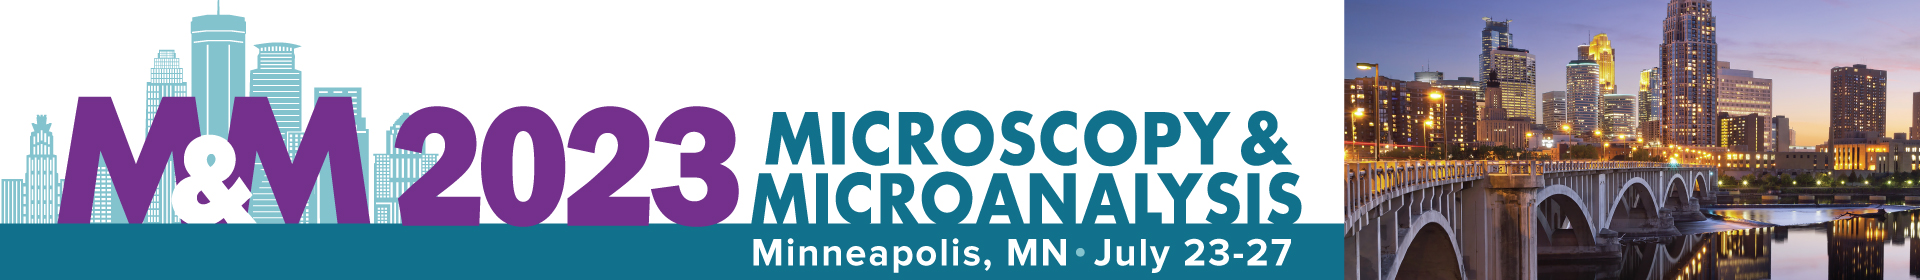 M&M 2023 Meeting (Microscopy & Microanalysis) Event Banner